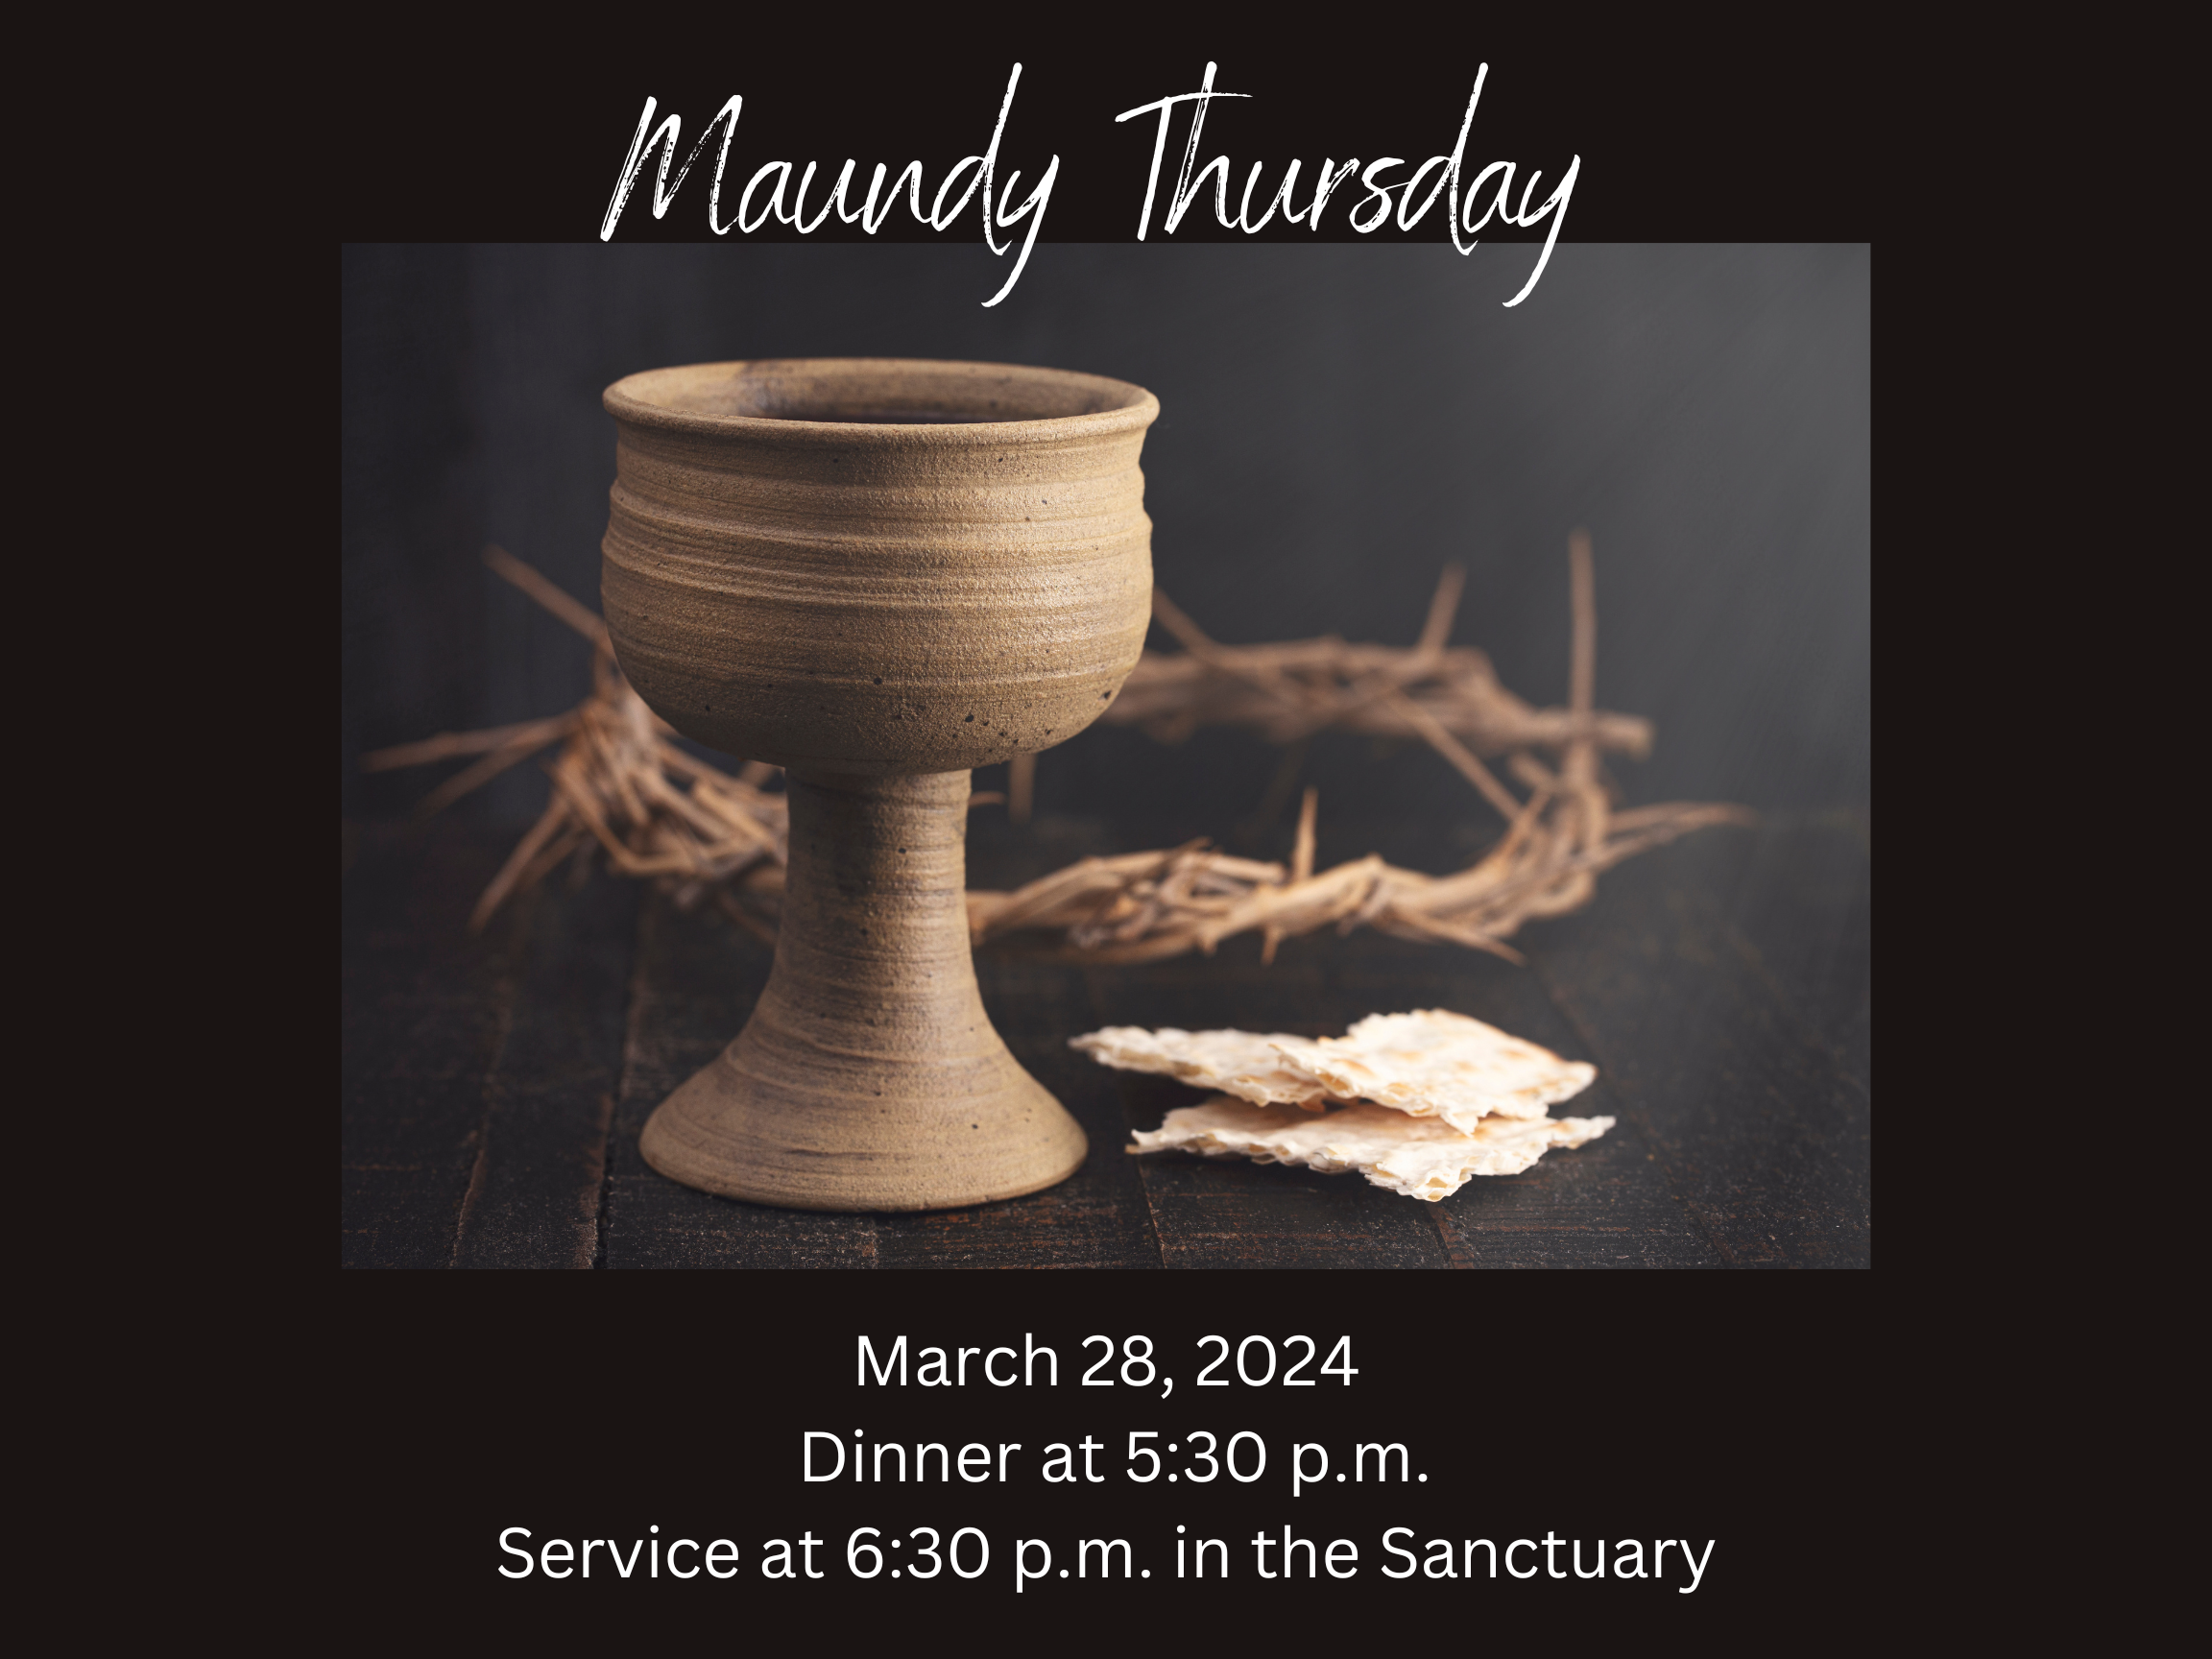 Maundy Thursday Dinner & Service- March 28, 2024